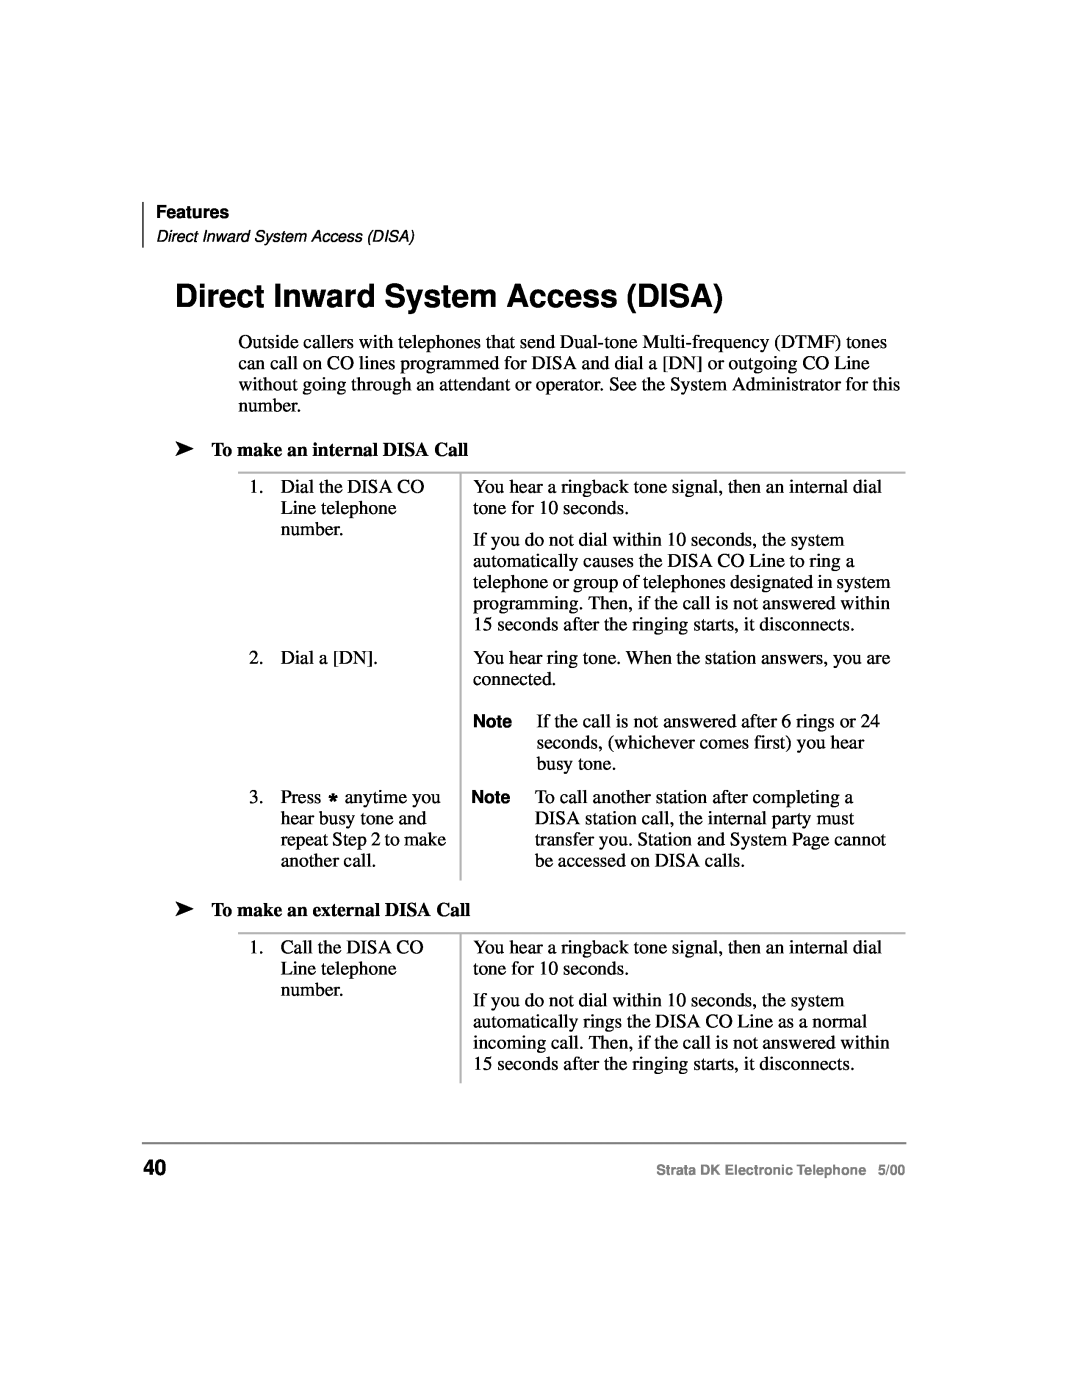 Toshiba Strata DK manual Direct Inward System Access DISA, To make an internal DISA Call, To make an external DISA Call 